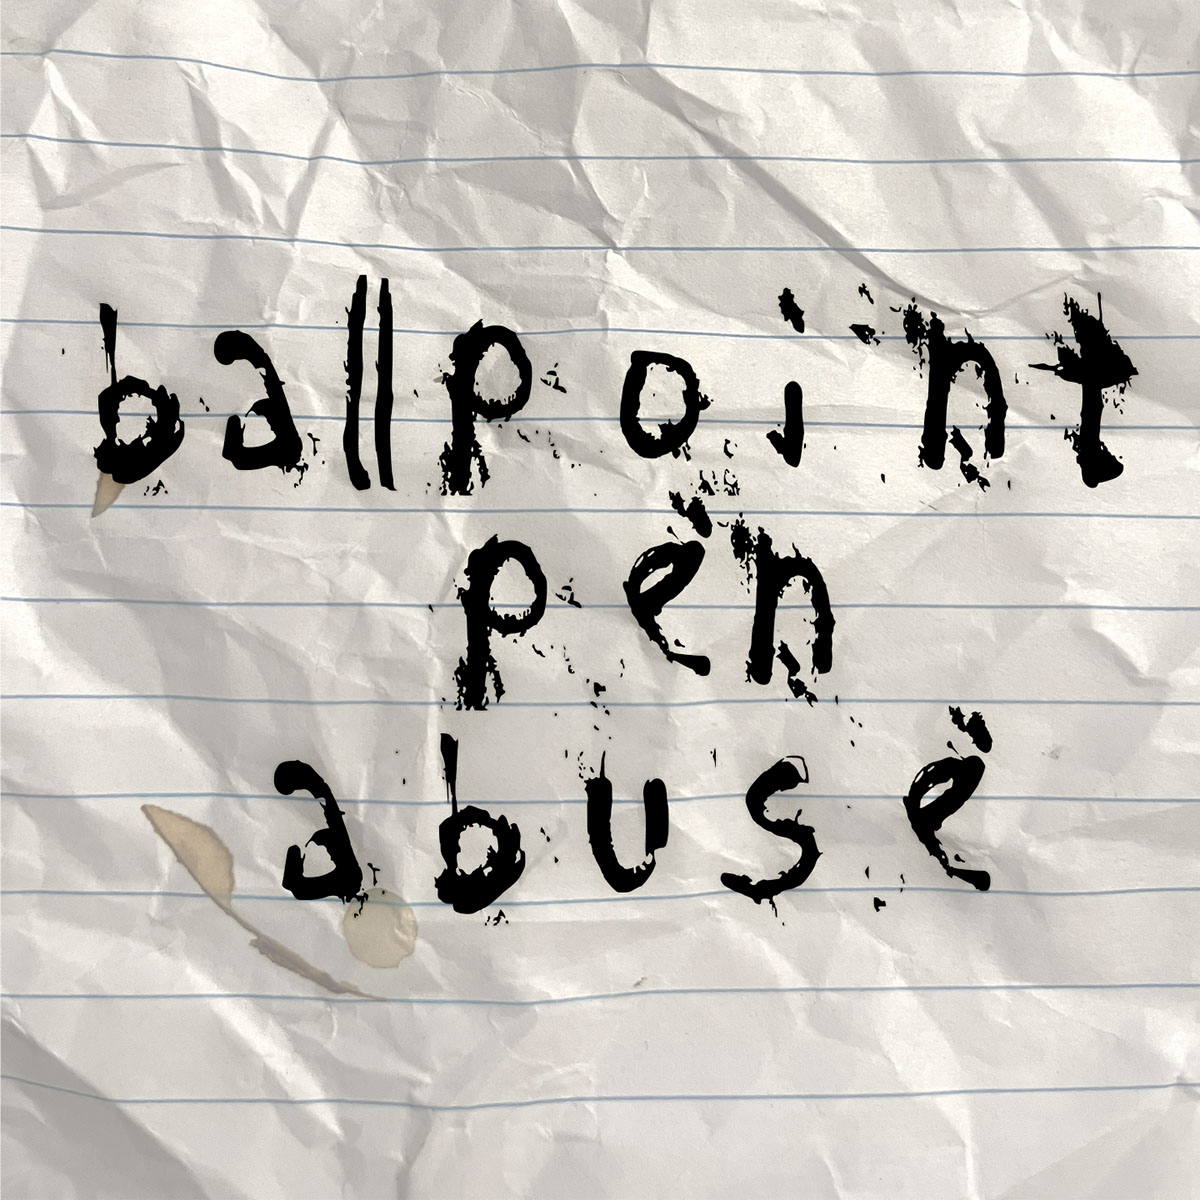 Ballpoint Pen Abuse rendition image